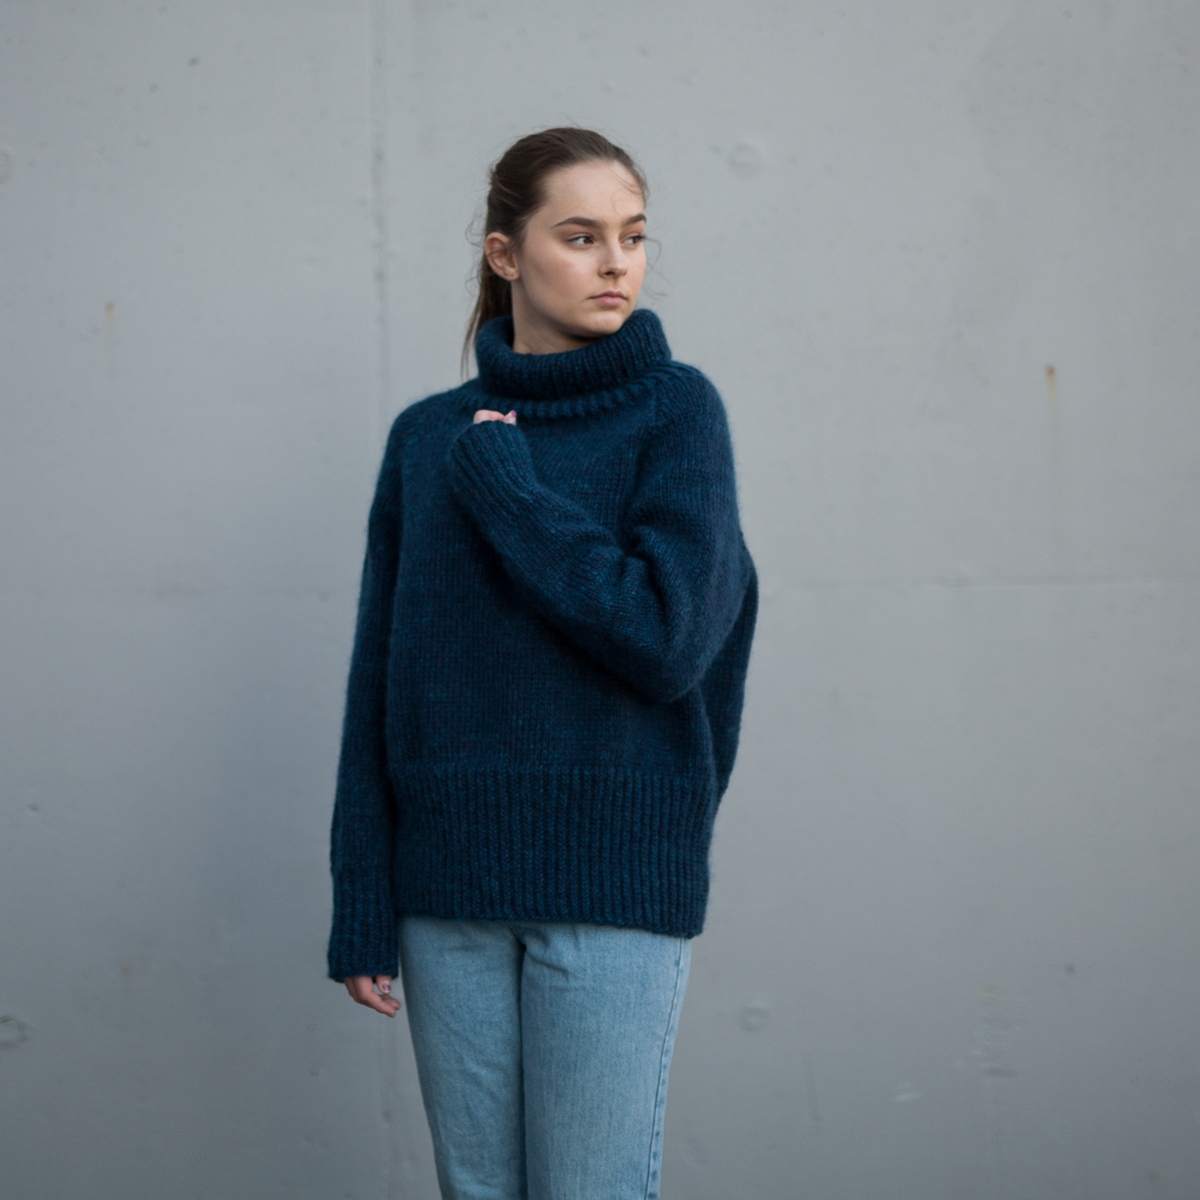 turtleneck sweater knitting pattern